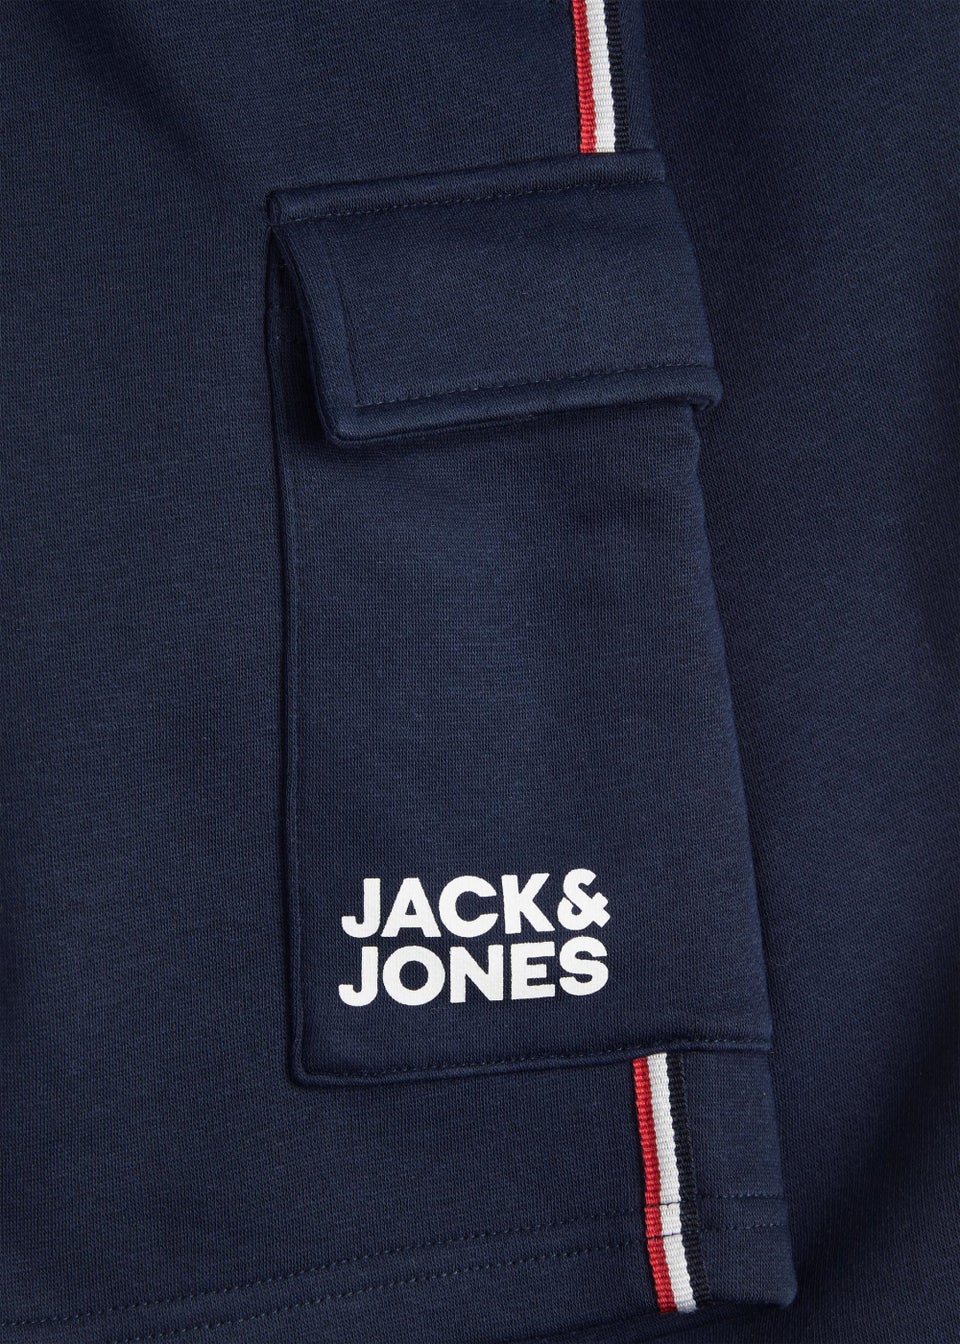 Jack & Jones Atlas Navy Cargo Shorts (6-16yrs) - Matalan